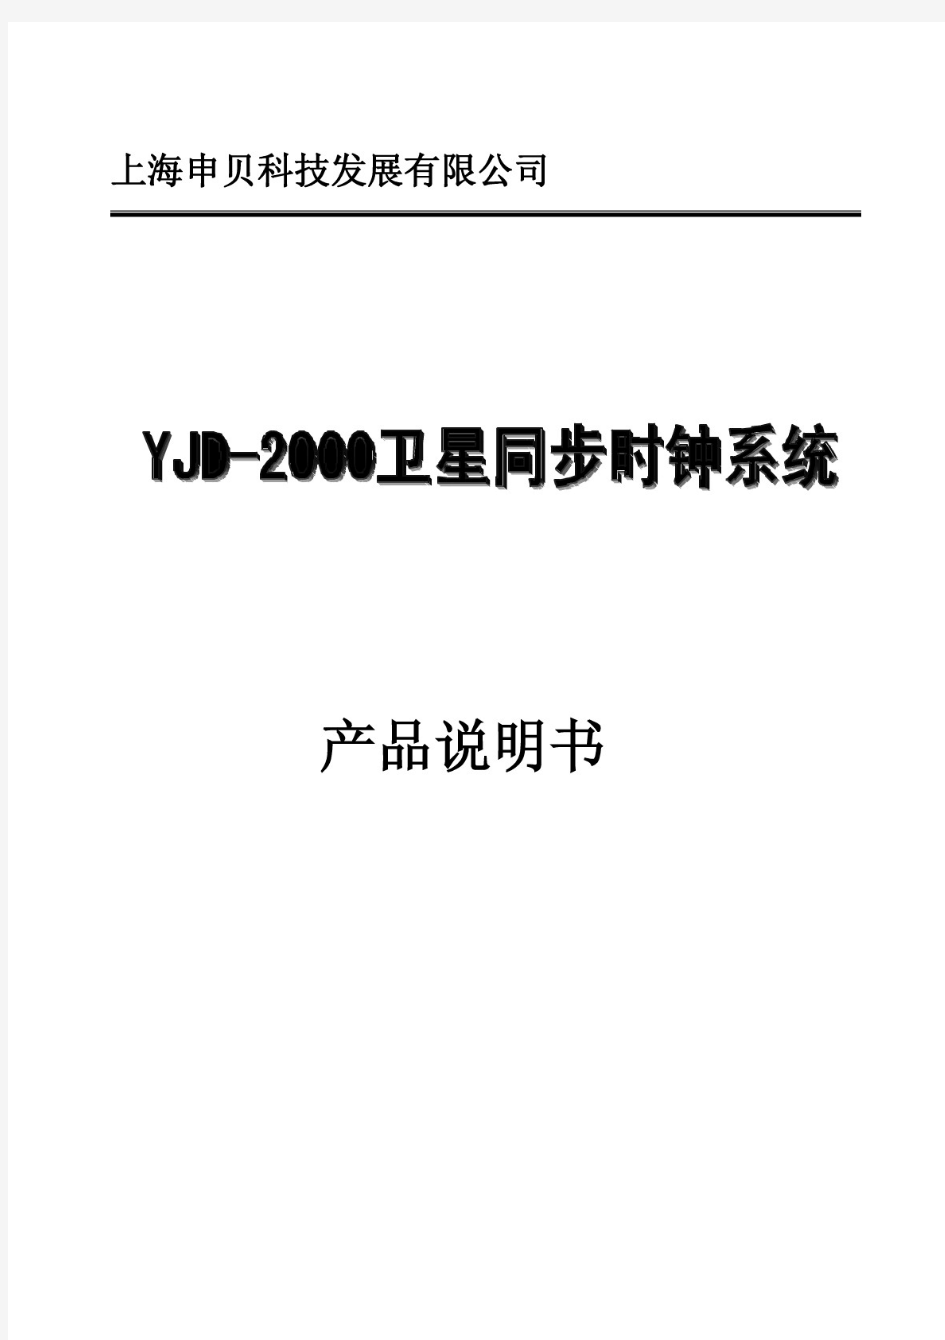 YJD-2000_卫星同步时钟系统说明书-上海申贝科技发展有限公司